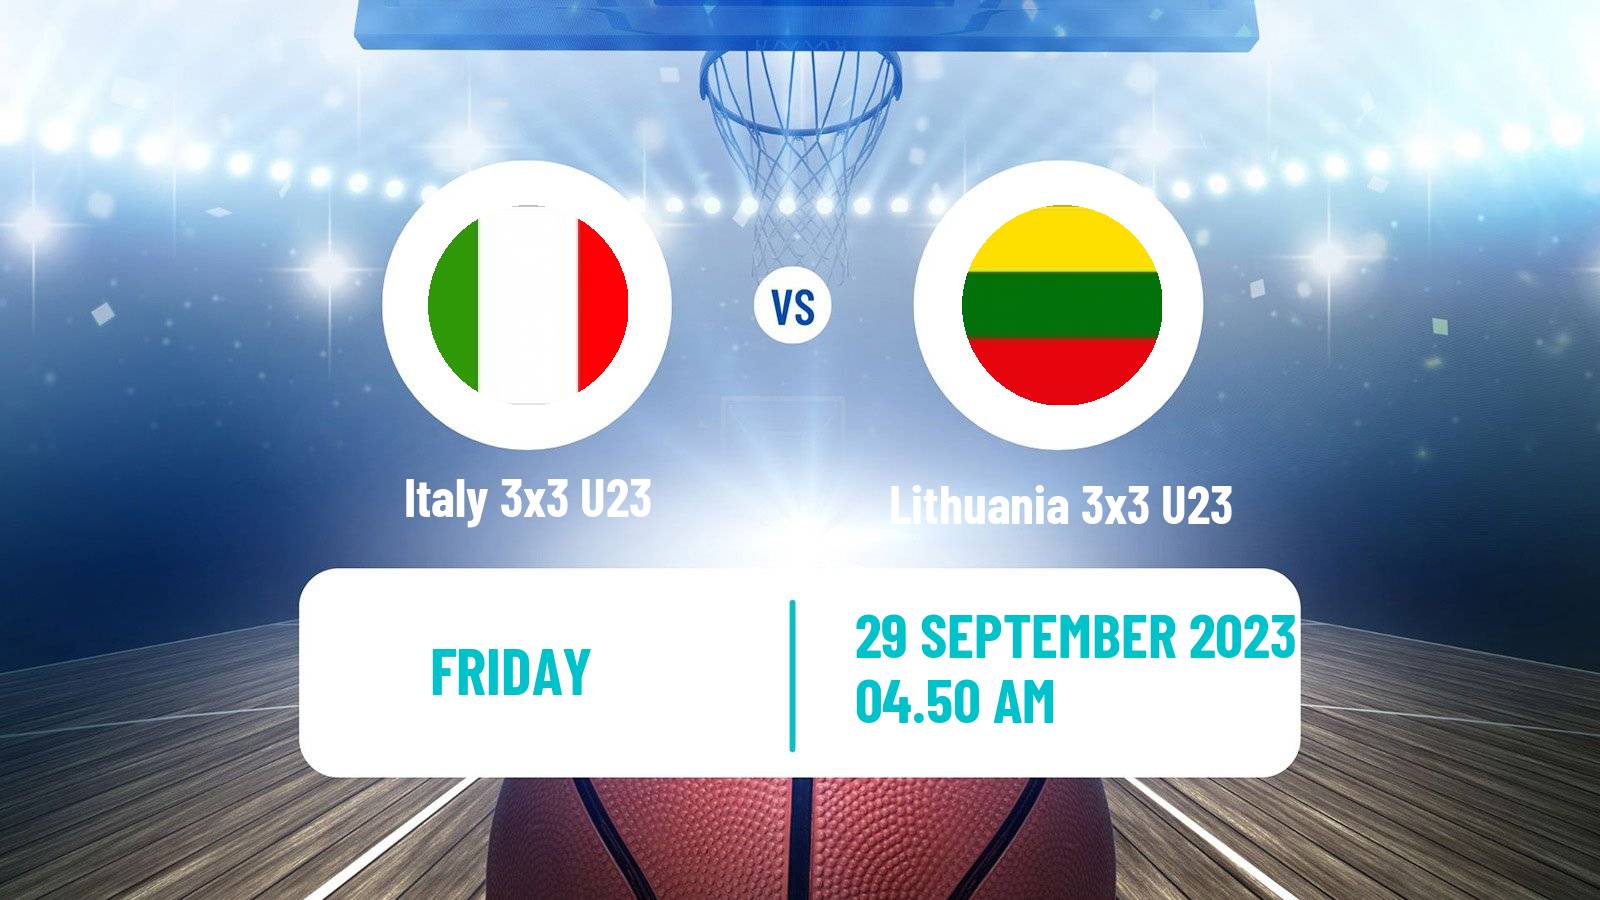 Basketball World Cup Basketball 3x3 U23 Italy 3x3 U23 - Lithuania 3x3 U23